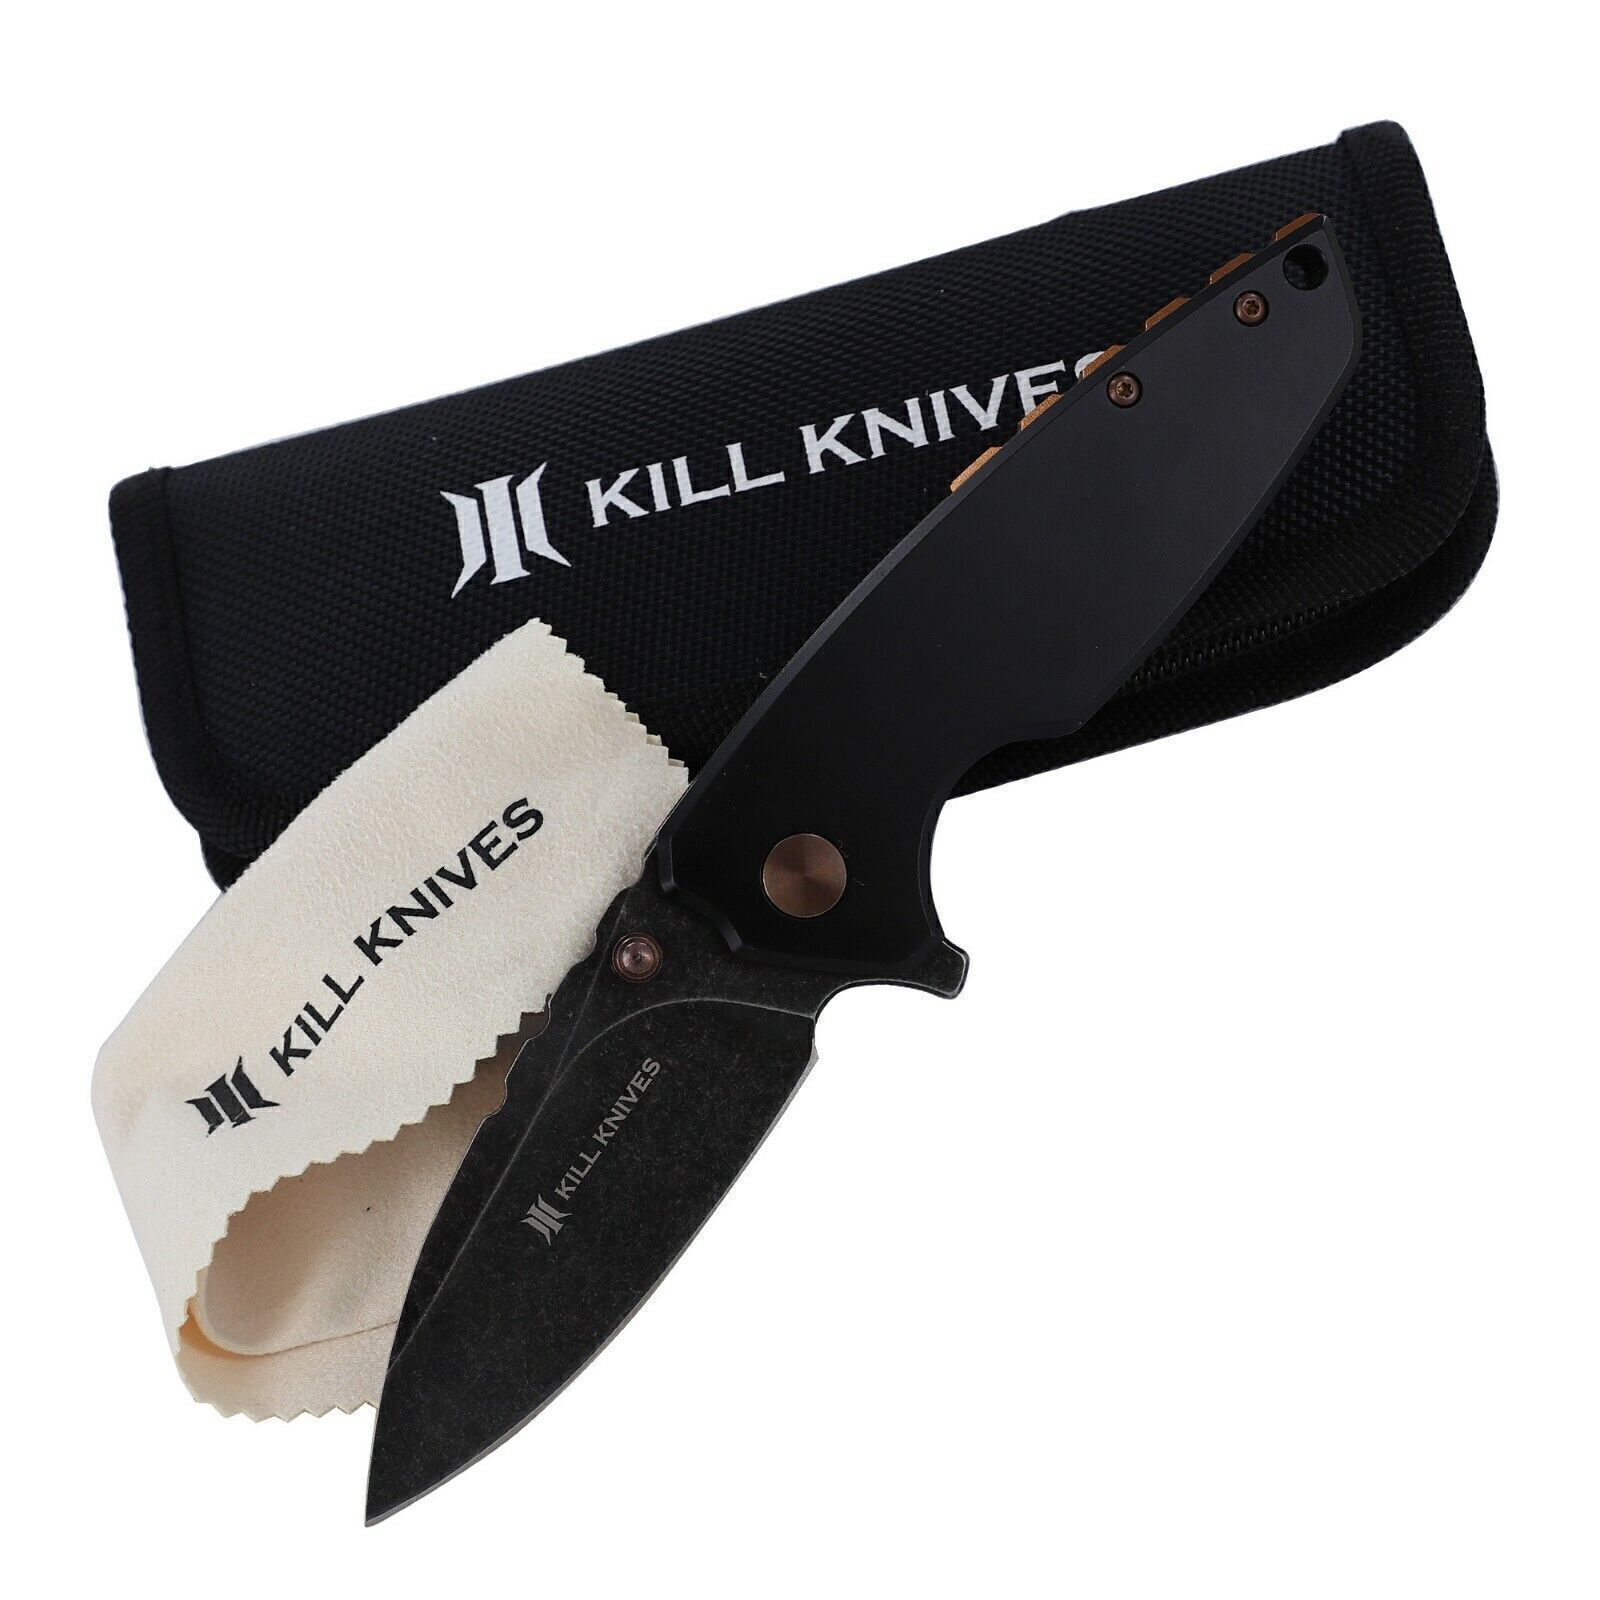 KILL KNIVES ™ High Quality D2 Steel Ball Bearing Assisted Folding Pocket Knife